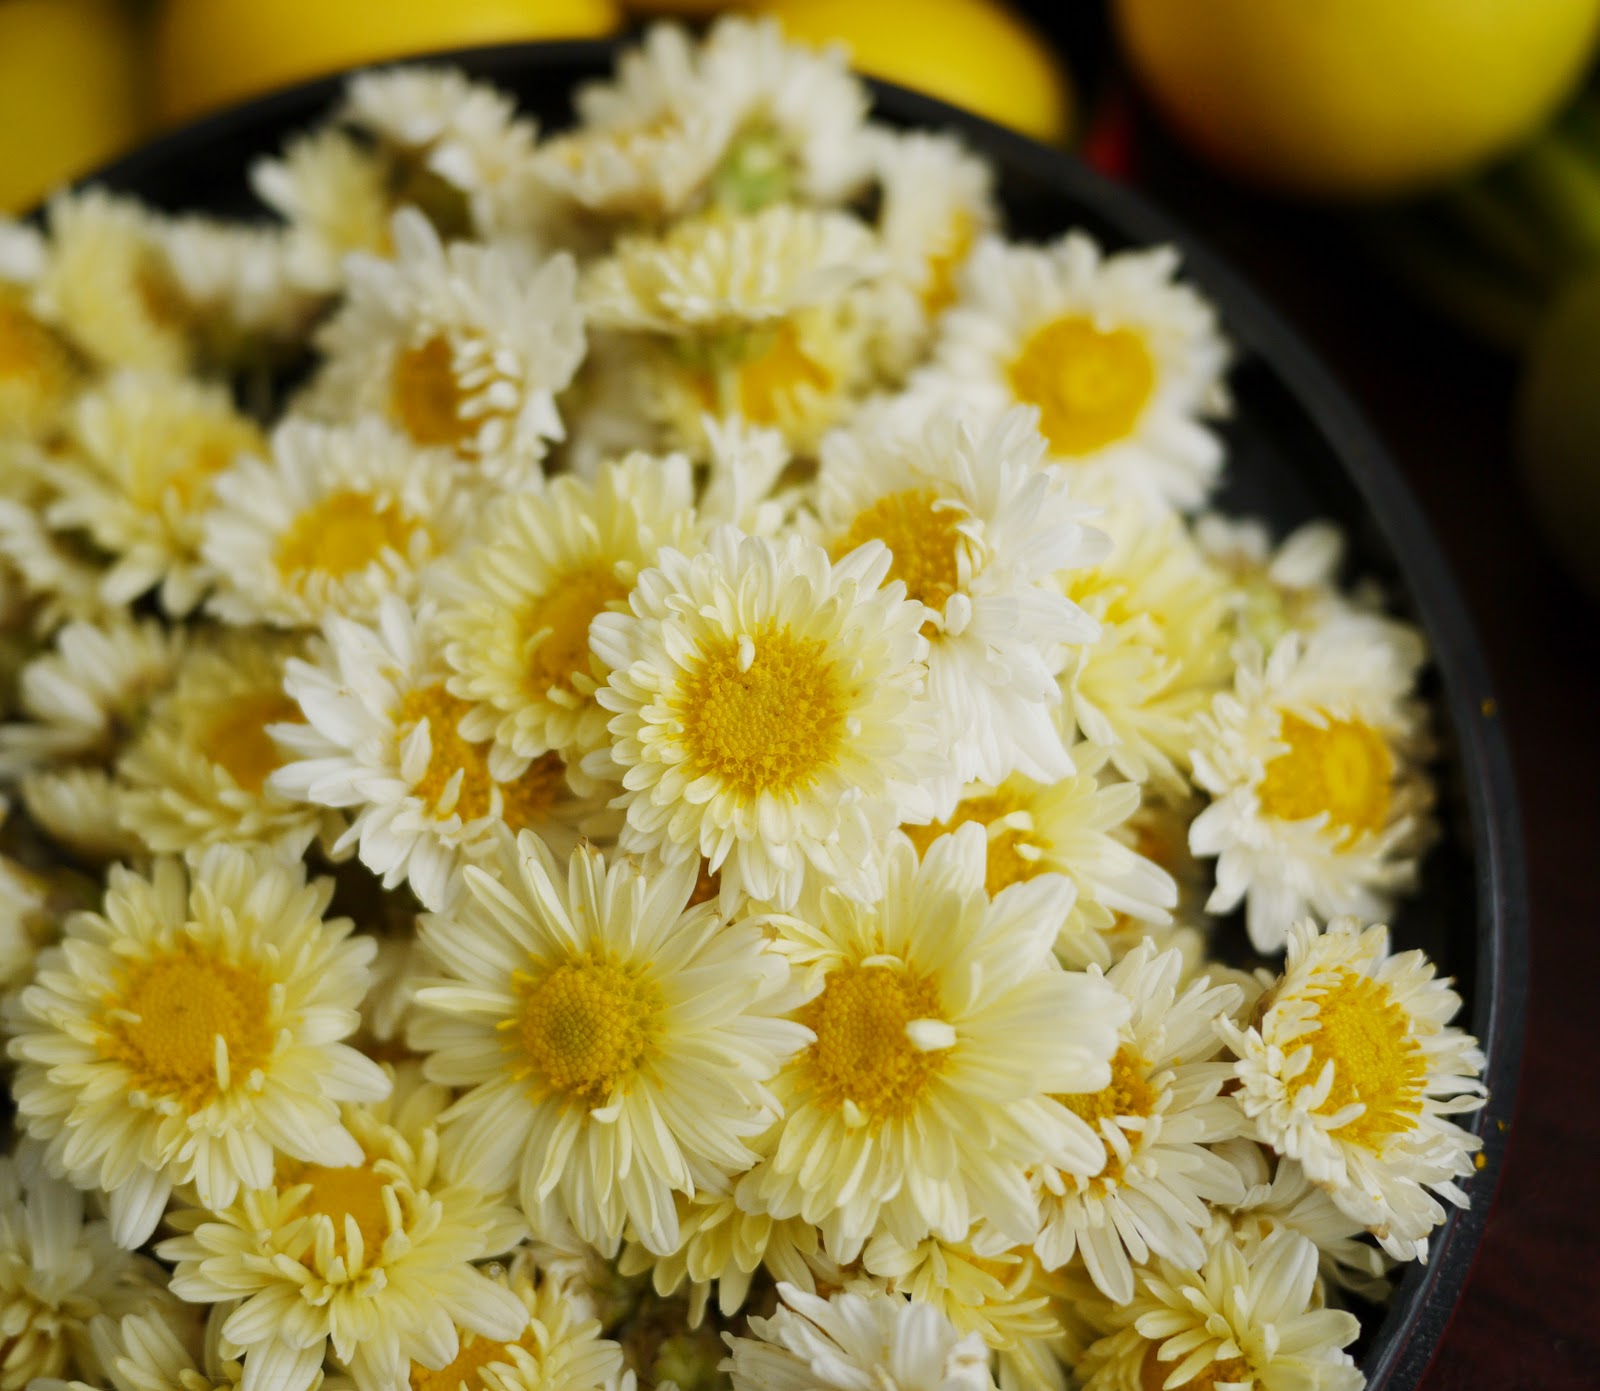 Chrysanthemum tea recipe: How to make chrysanthemum tea?